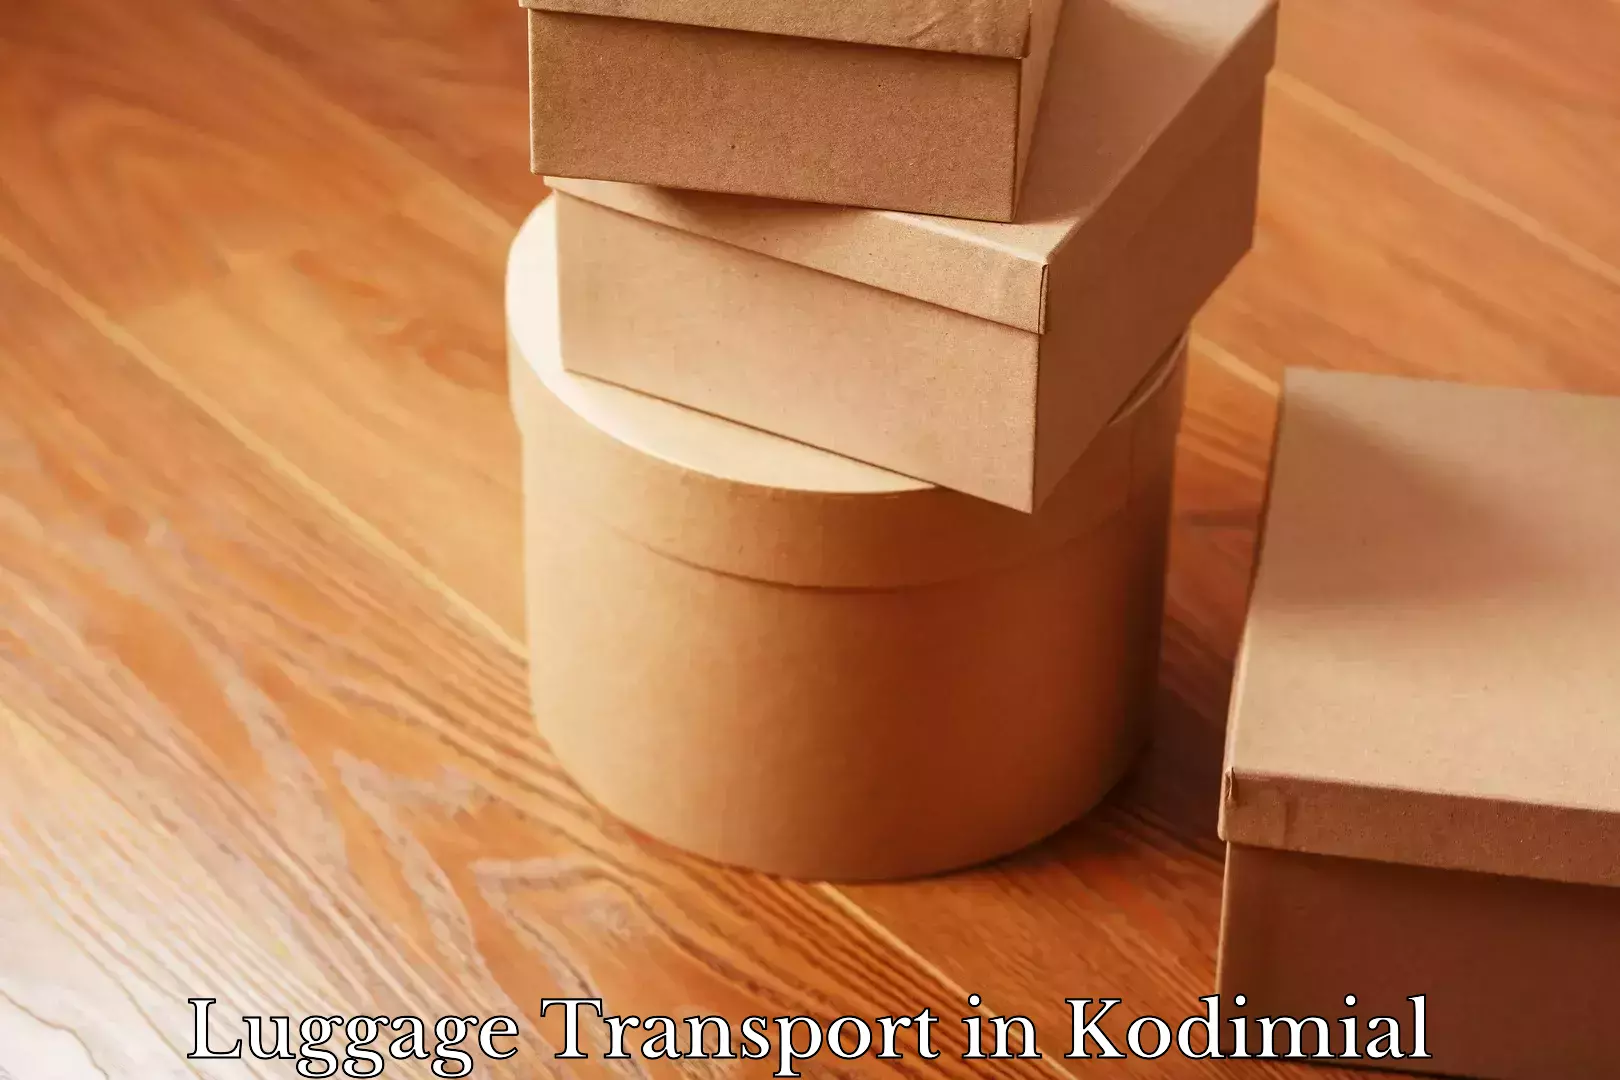 Luggage transfer service in Kodimial